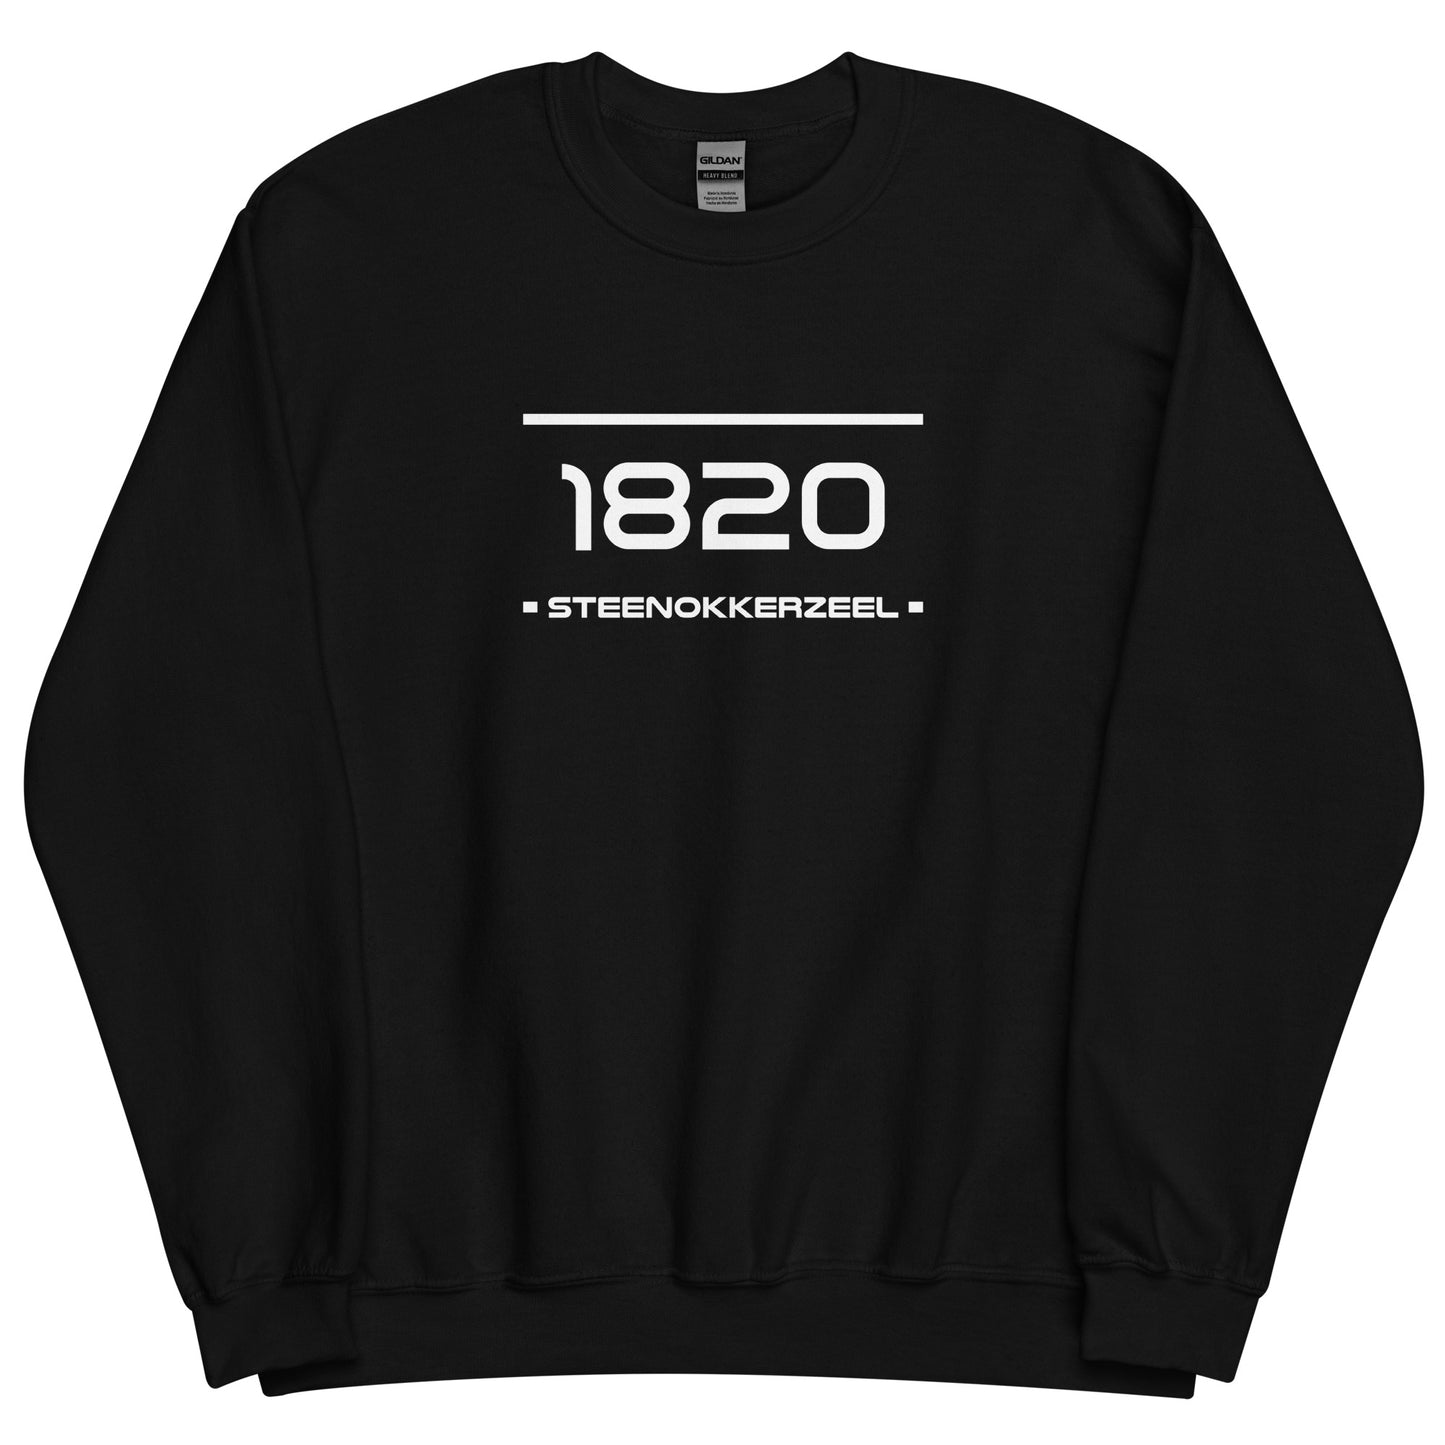 Sweater - 1820 - Steenokkerzeel (M/V)